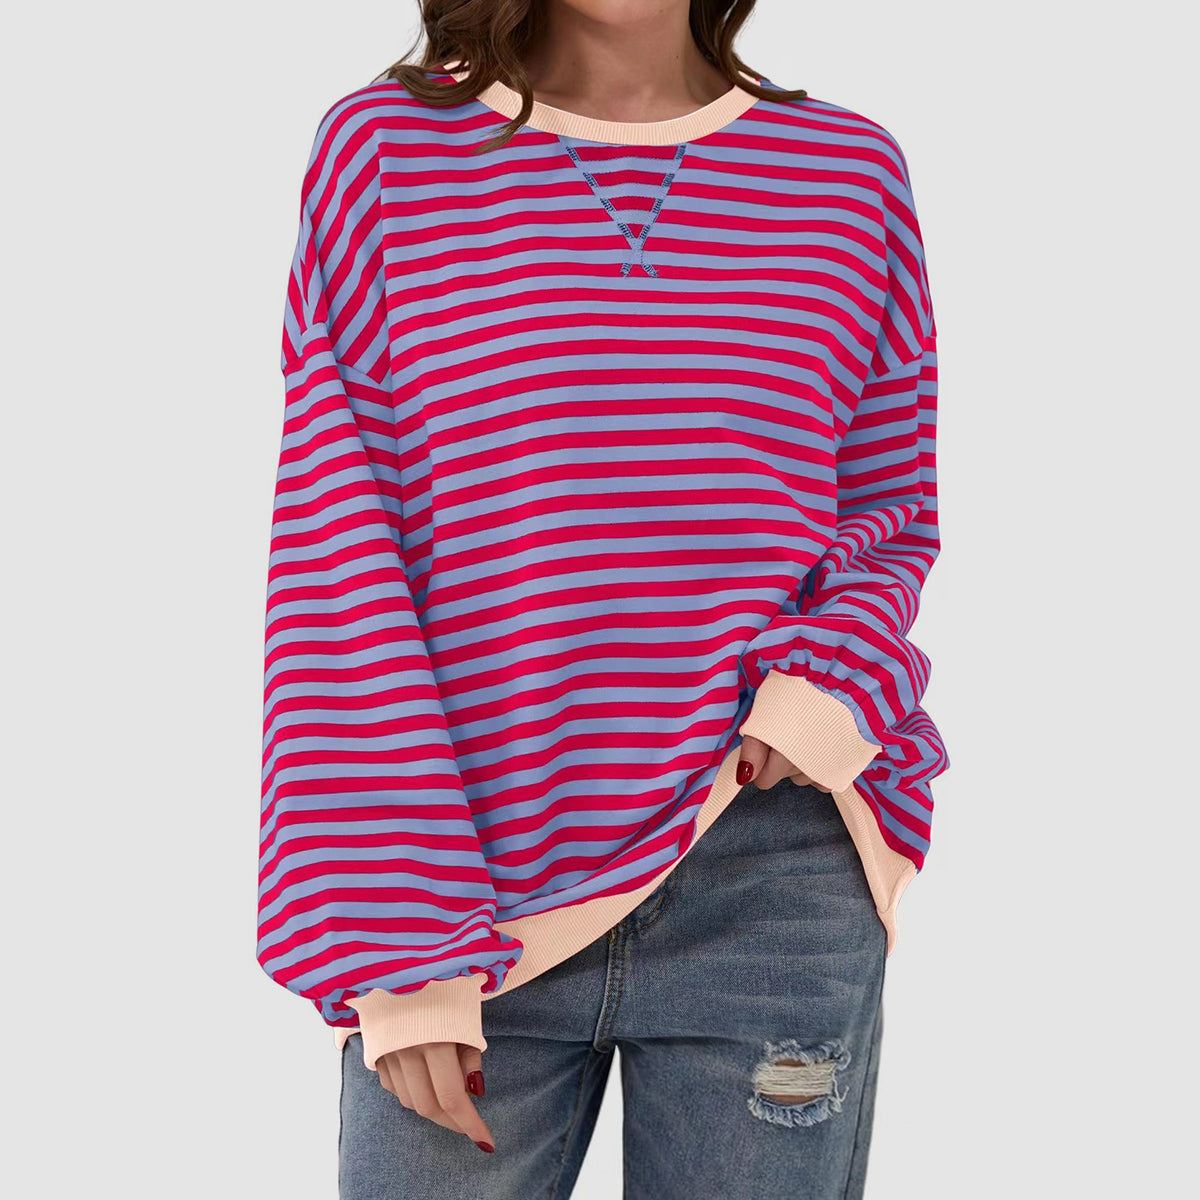 TEEK - Striped Round Neck Long Sleeve Shirt TOPS TEEK Trend Cerise S 